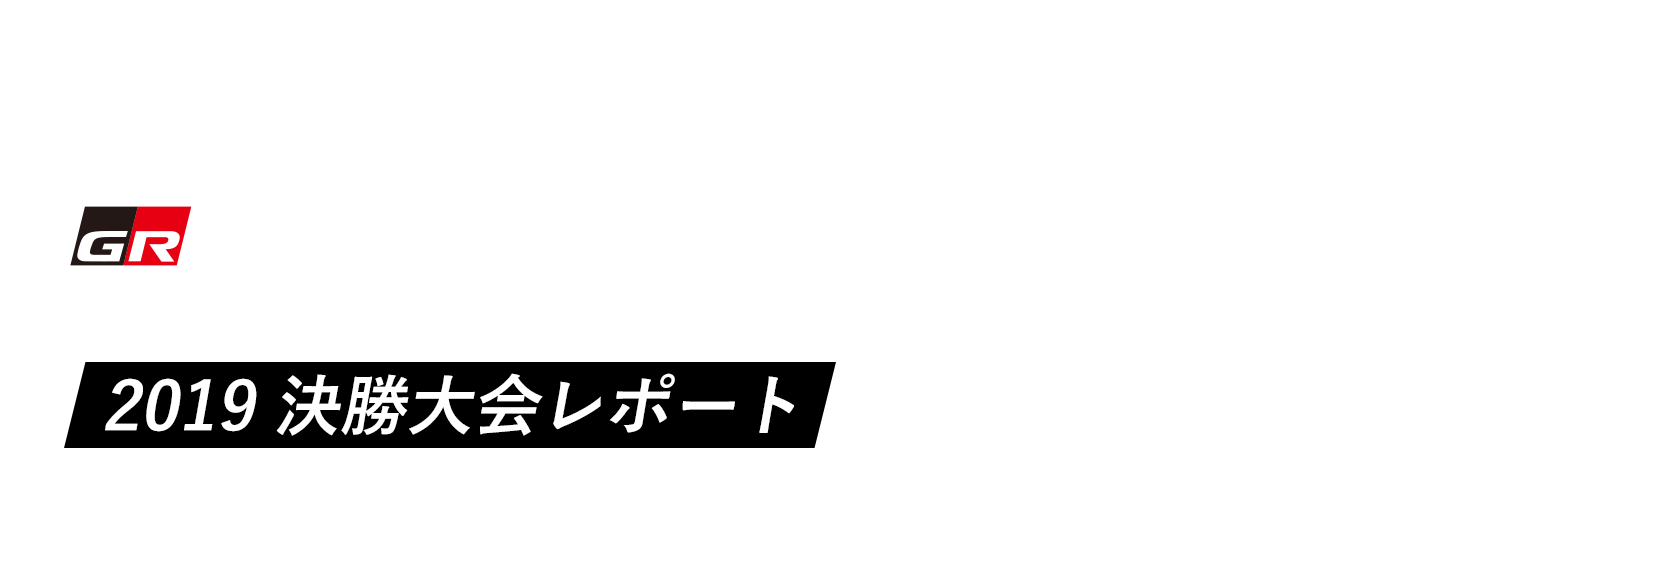 GR Supra GT CUP 2019 決勝大会レポート 第49回東京モーターショー2019